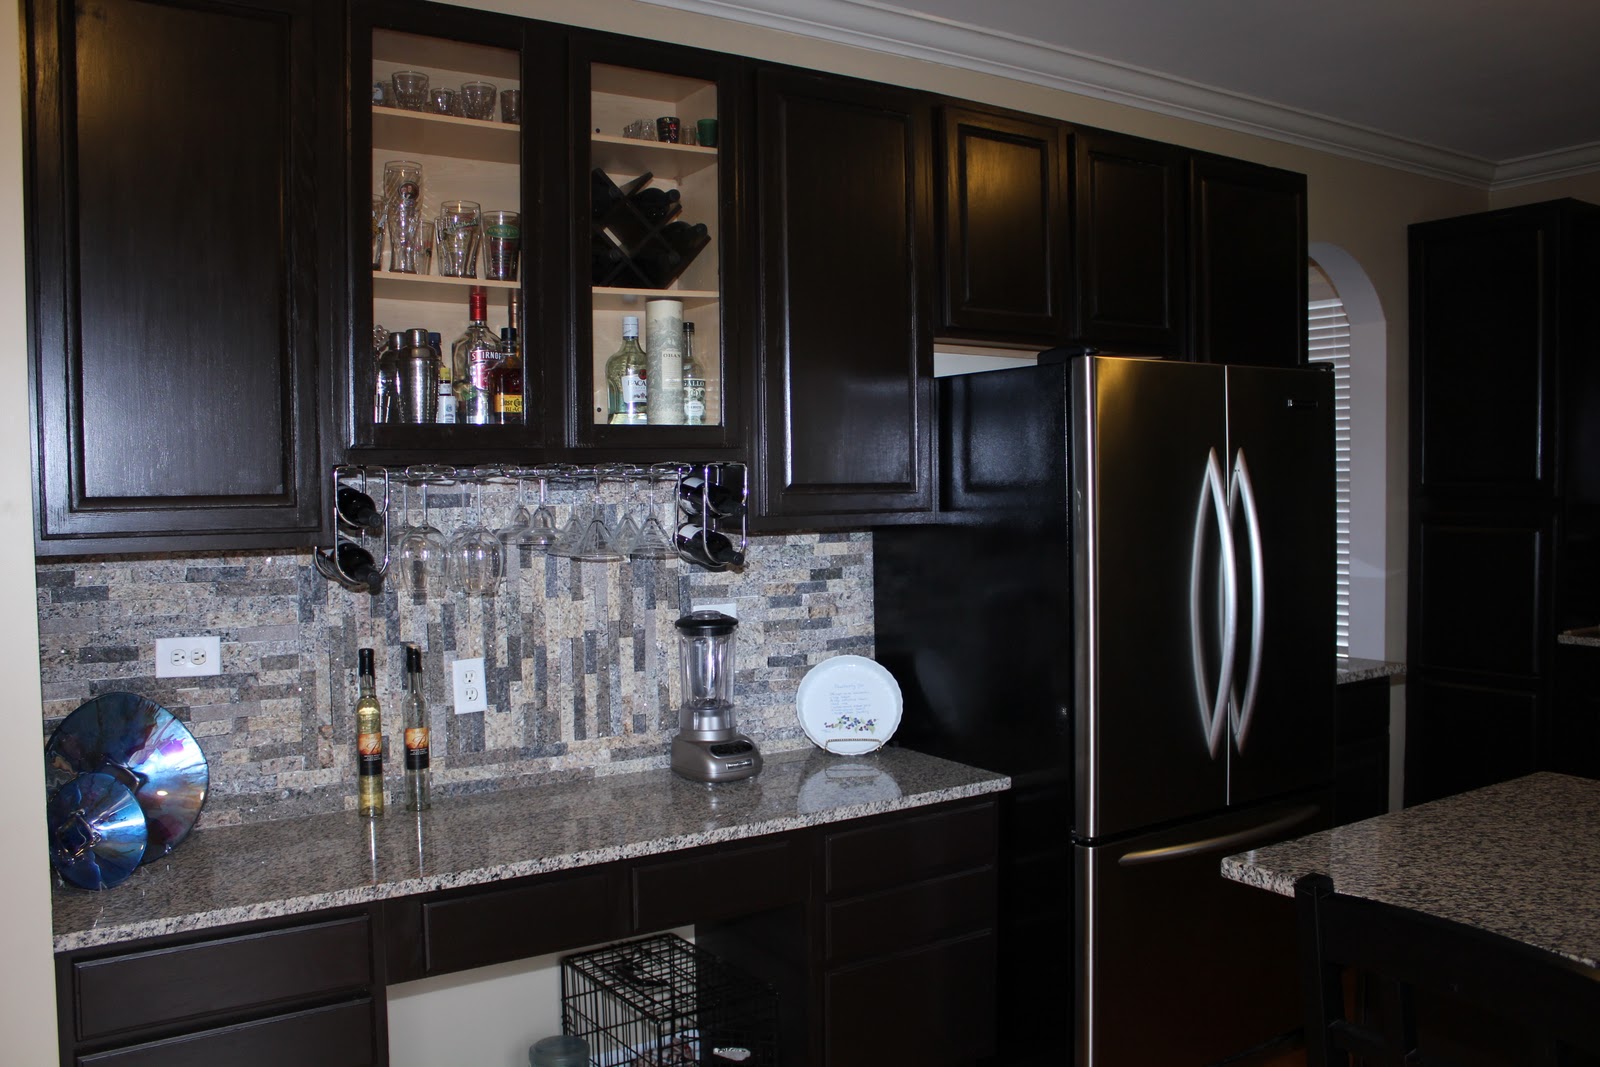 Black Kitchen Feats Masculine Black Kitchen Cabinet Refacing Feats With Slate Tile Backsplash And Mini Glass Rack Smart Kitchen Cabinet Refacing Ideas